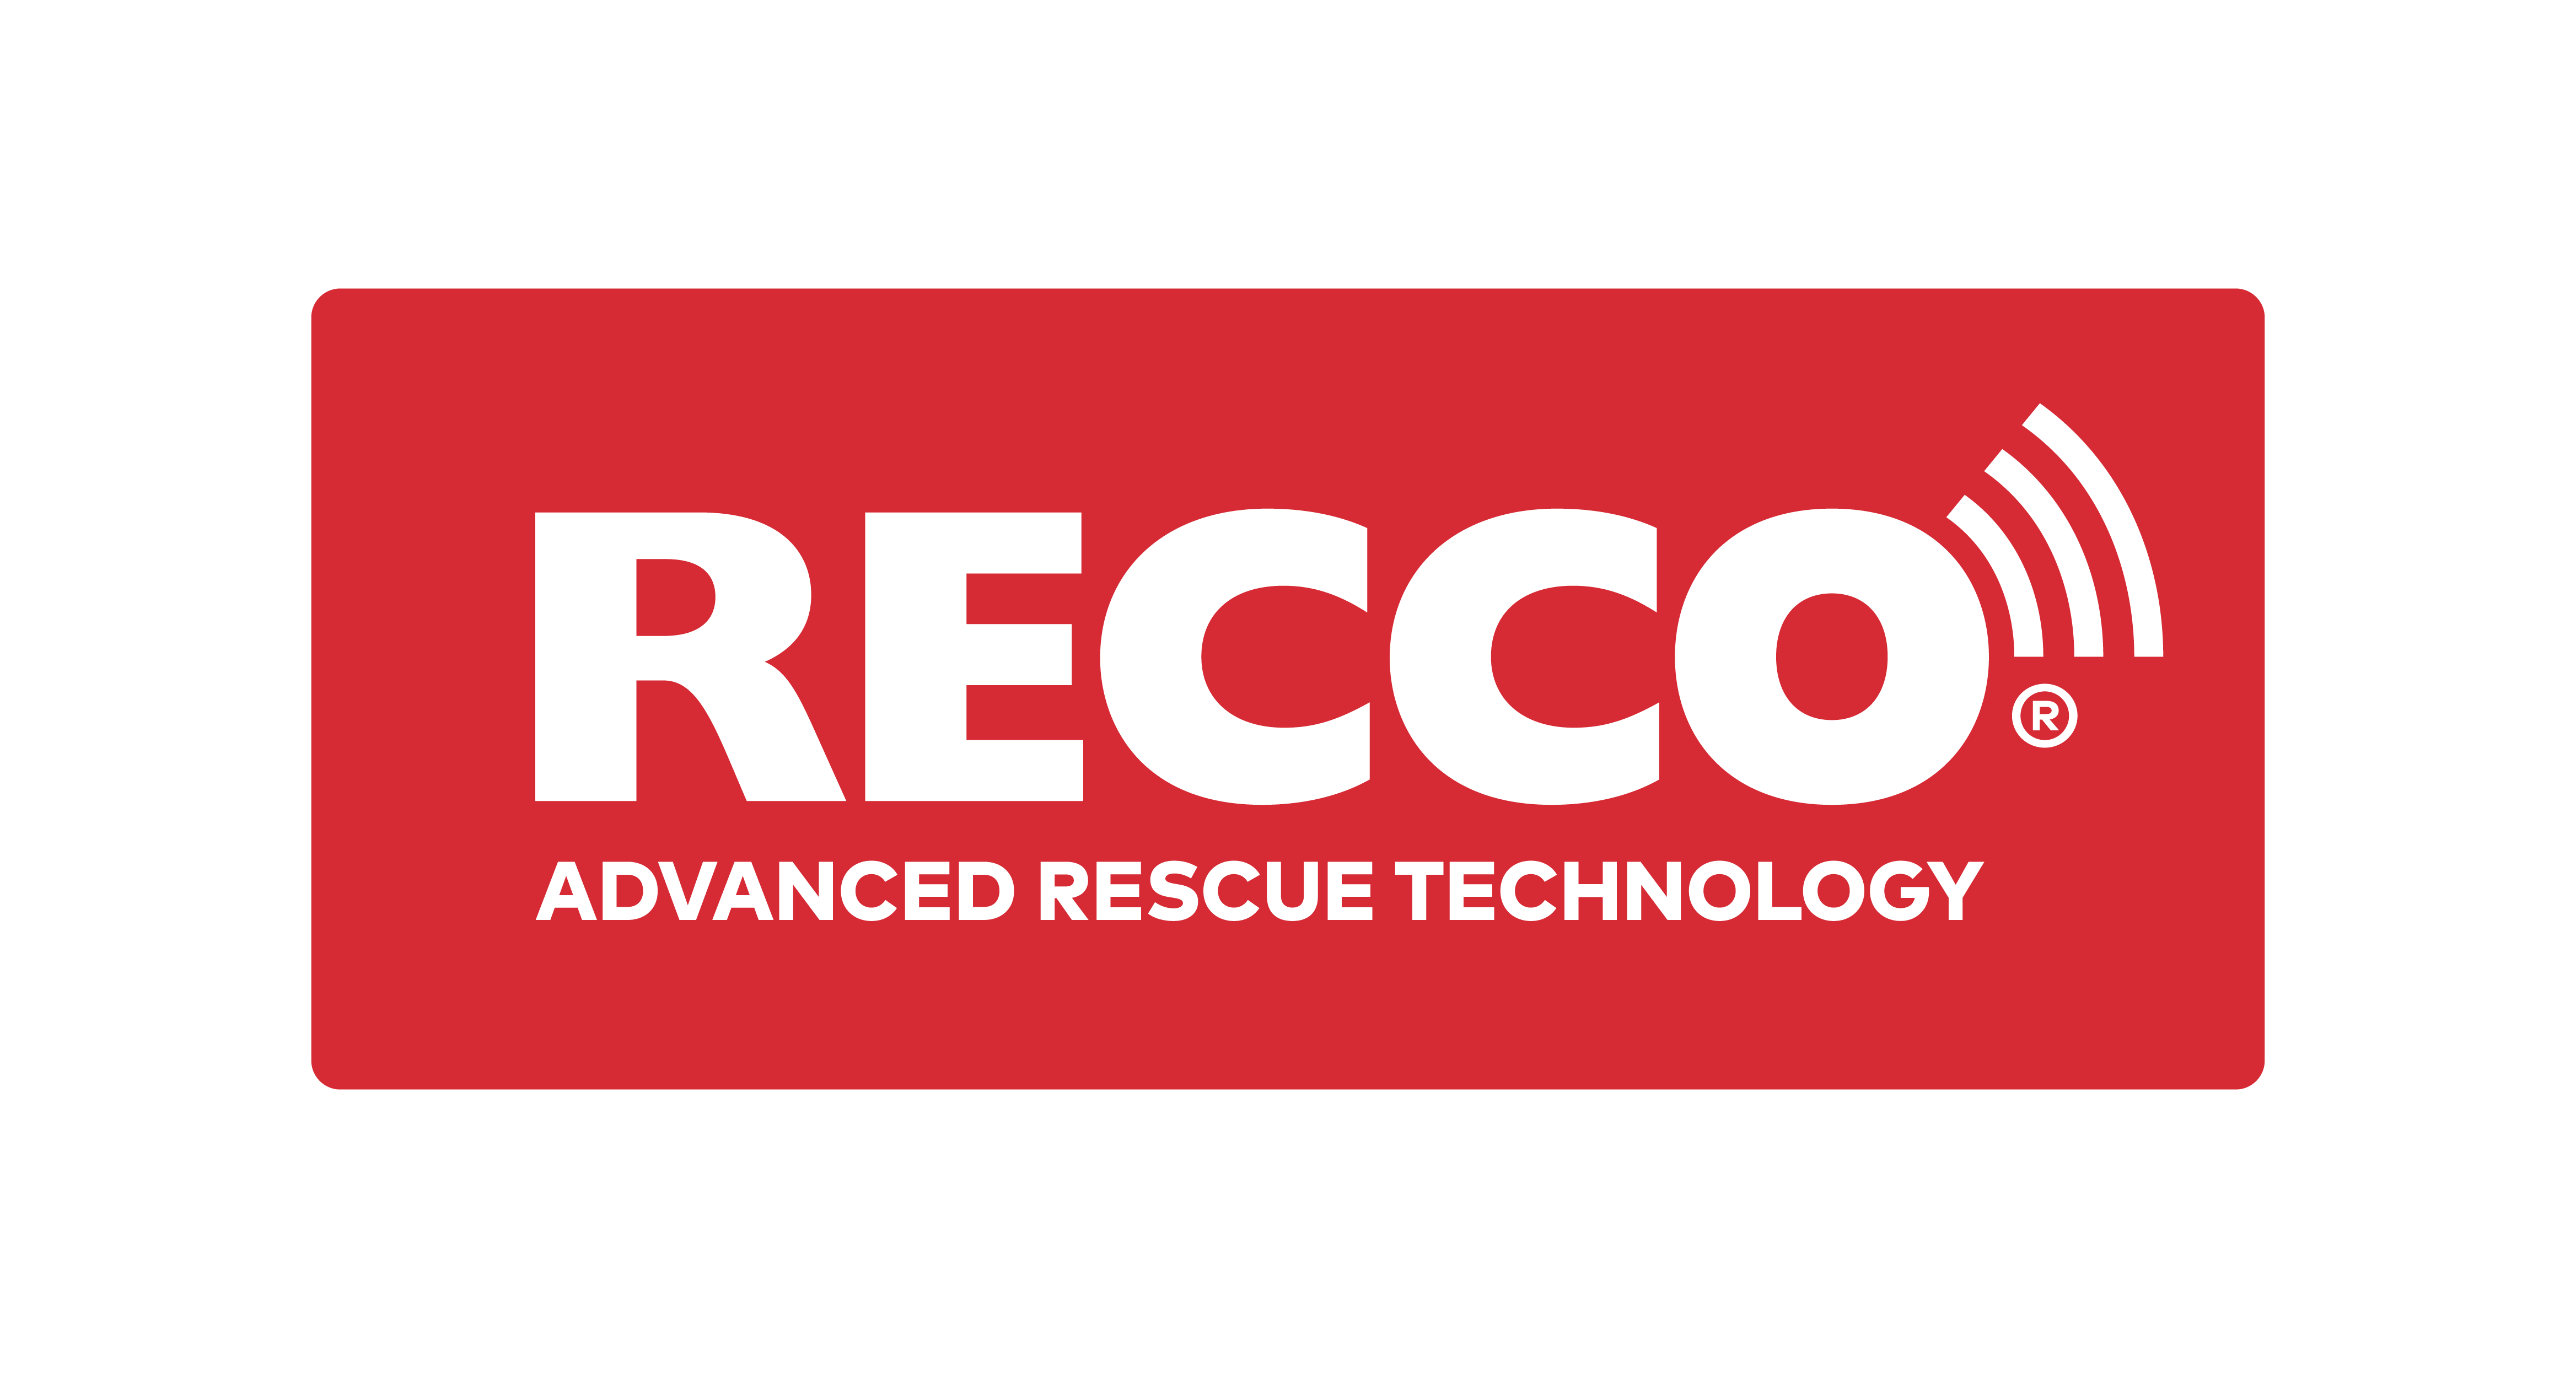 RECCO - Be Searchable